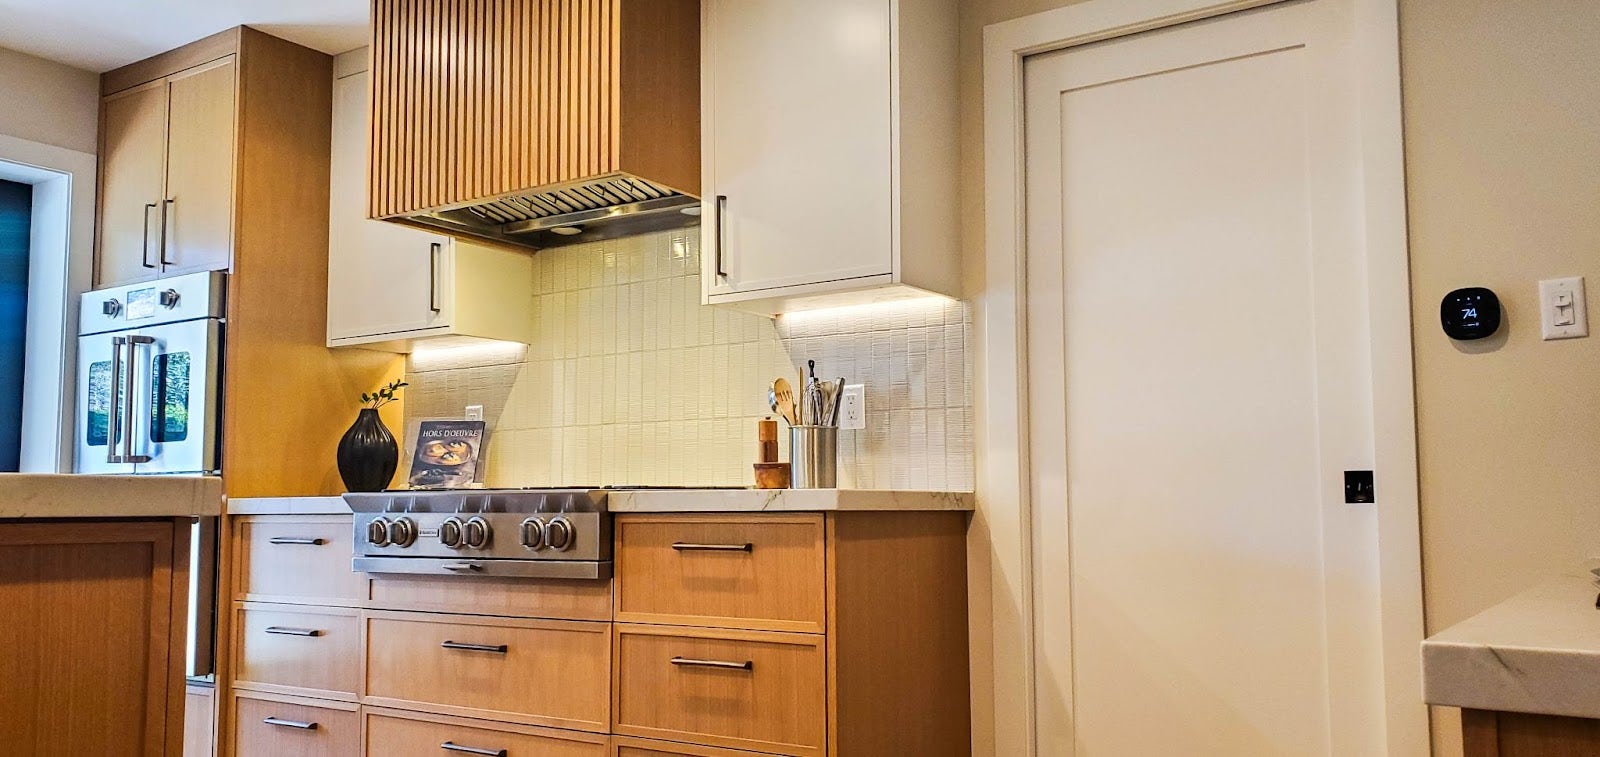 Modern kitchen featuring Proline range hood, white cabinets, and marble countertops. - Proline Range Hoods - prolinerangehoods.com 